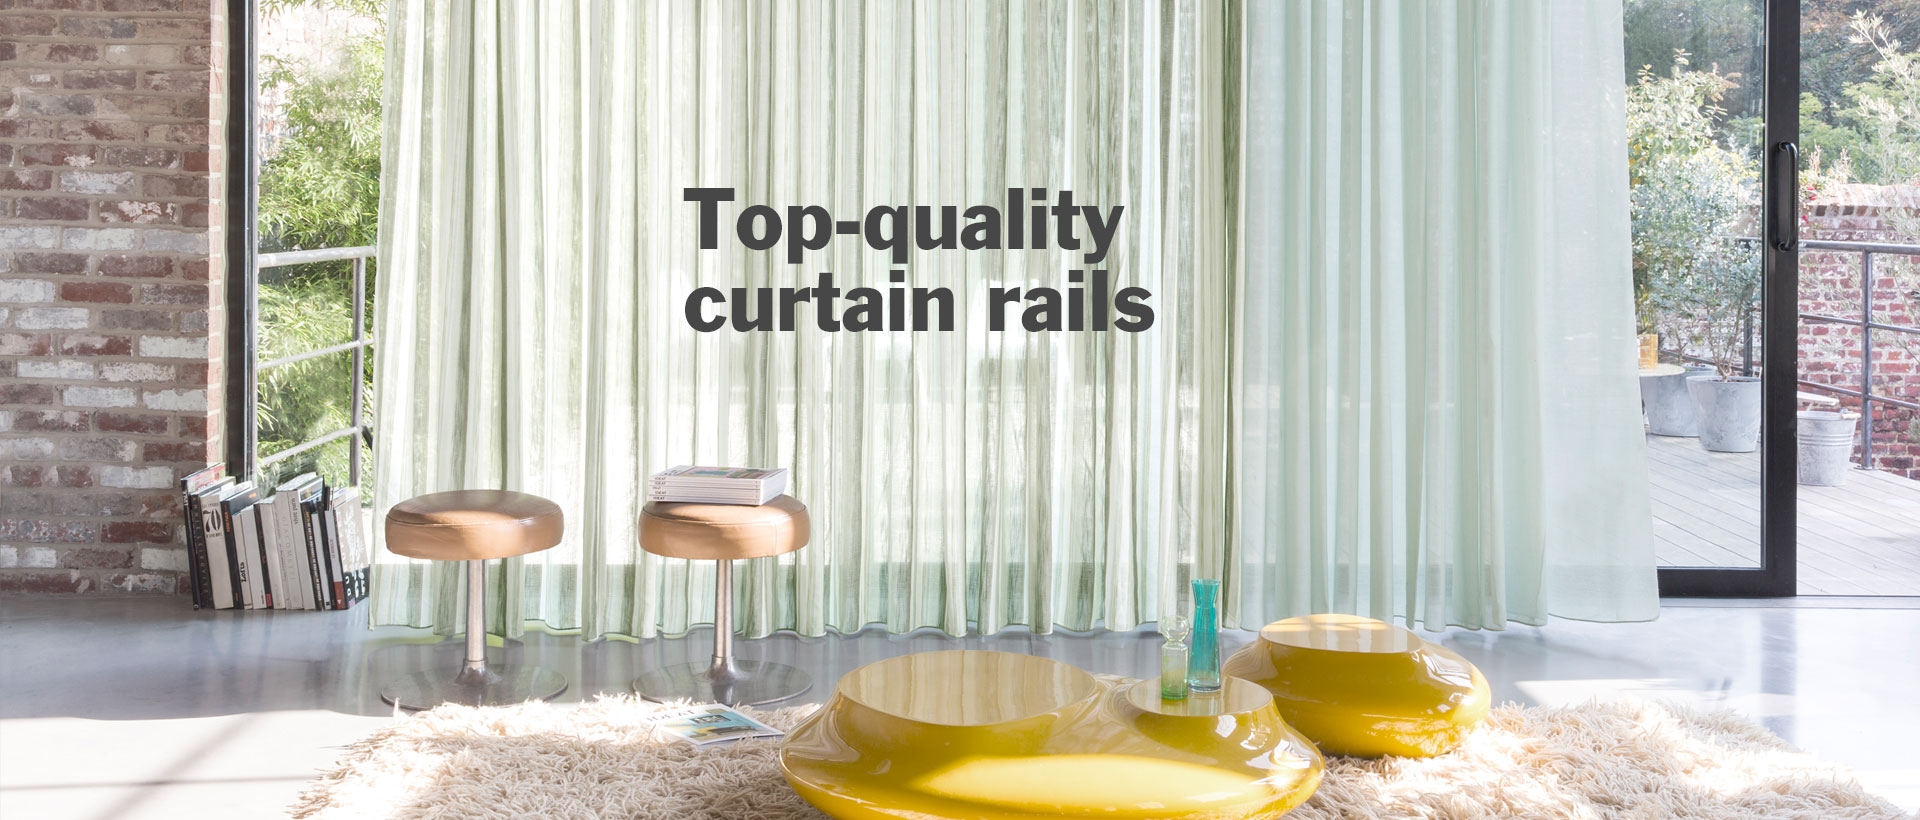 Top-quality curtain rails